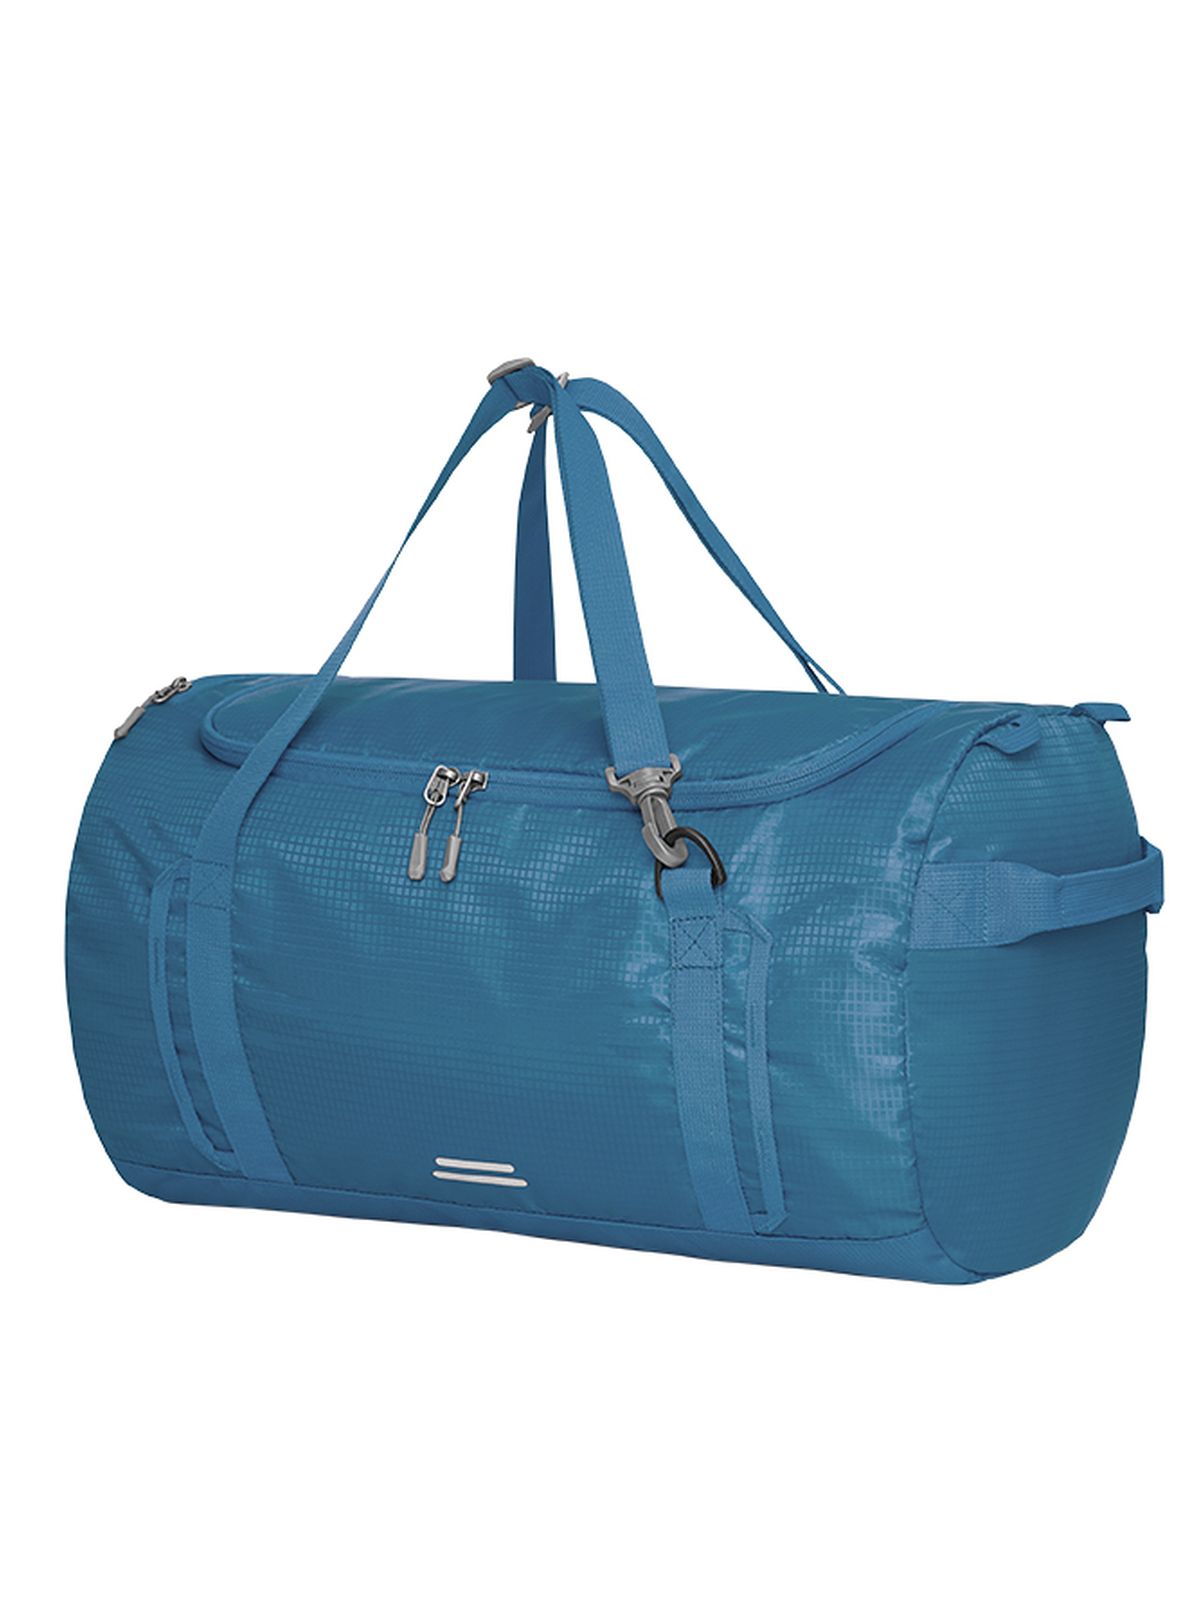 sports-bag-outdoor-blue.webp